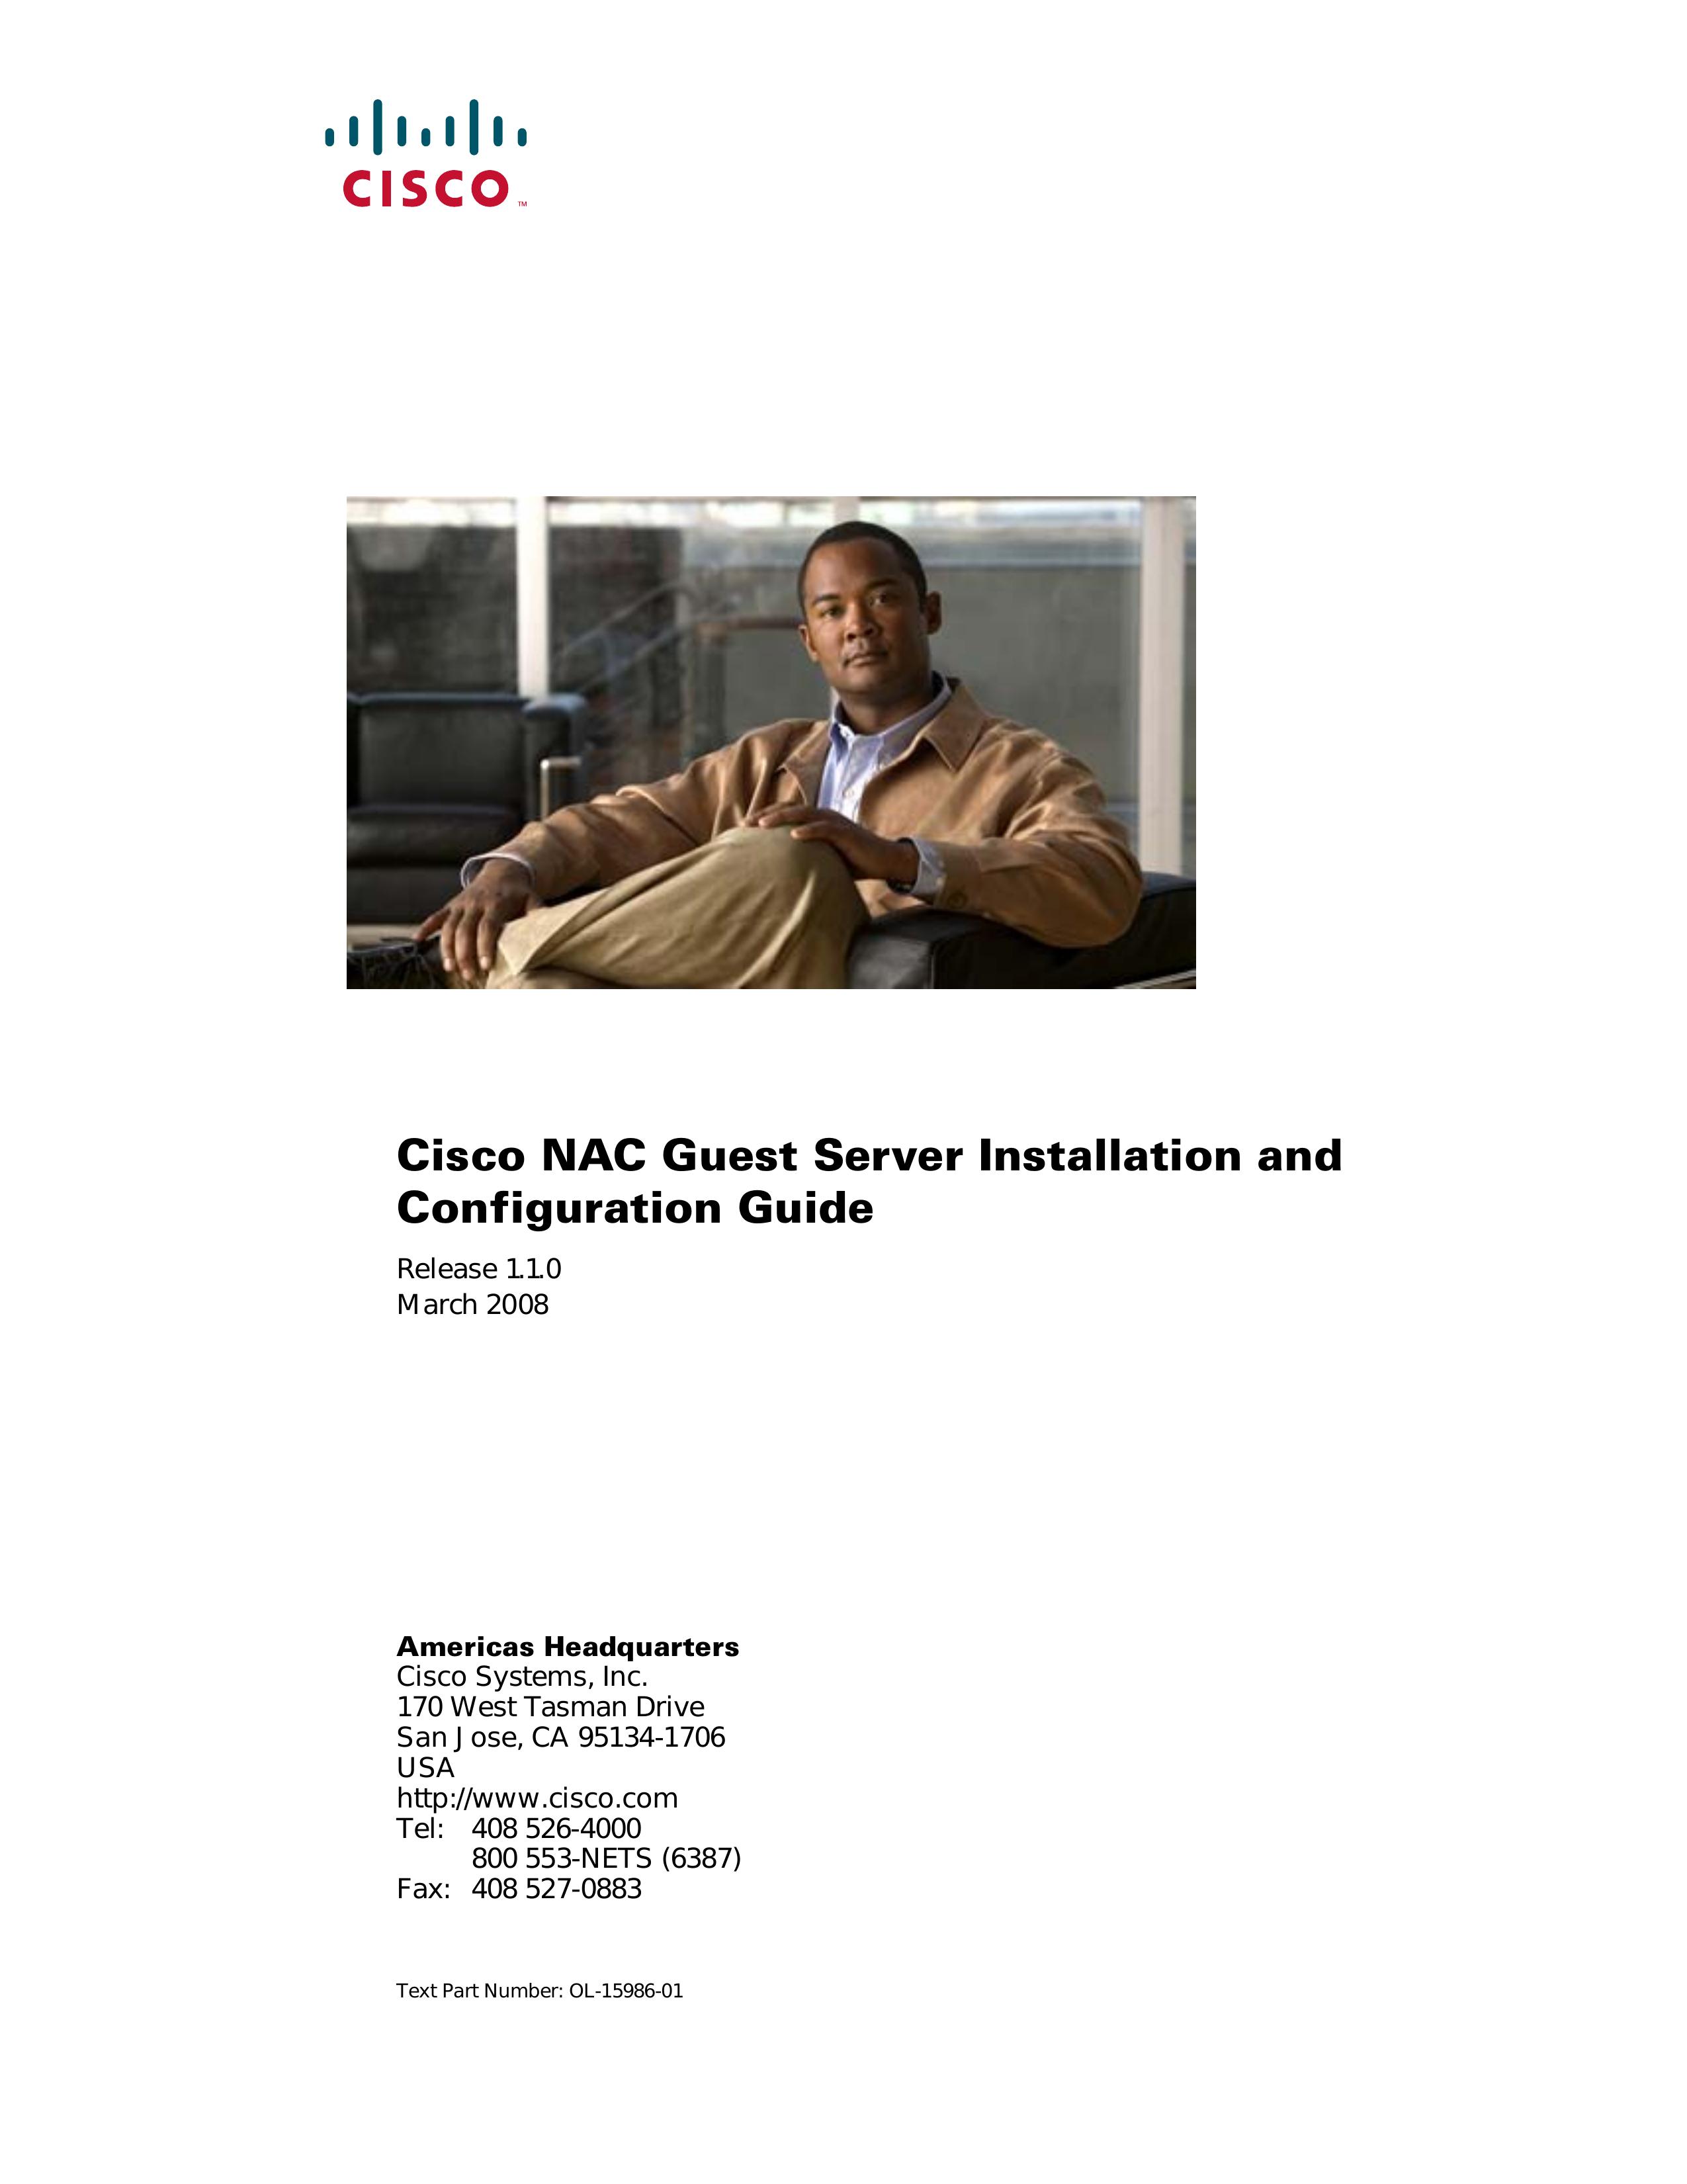 Cisco Systems OL-15986-01 Security Camera User Manual